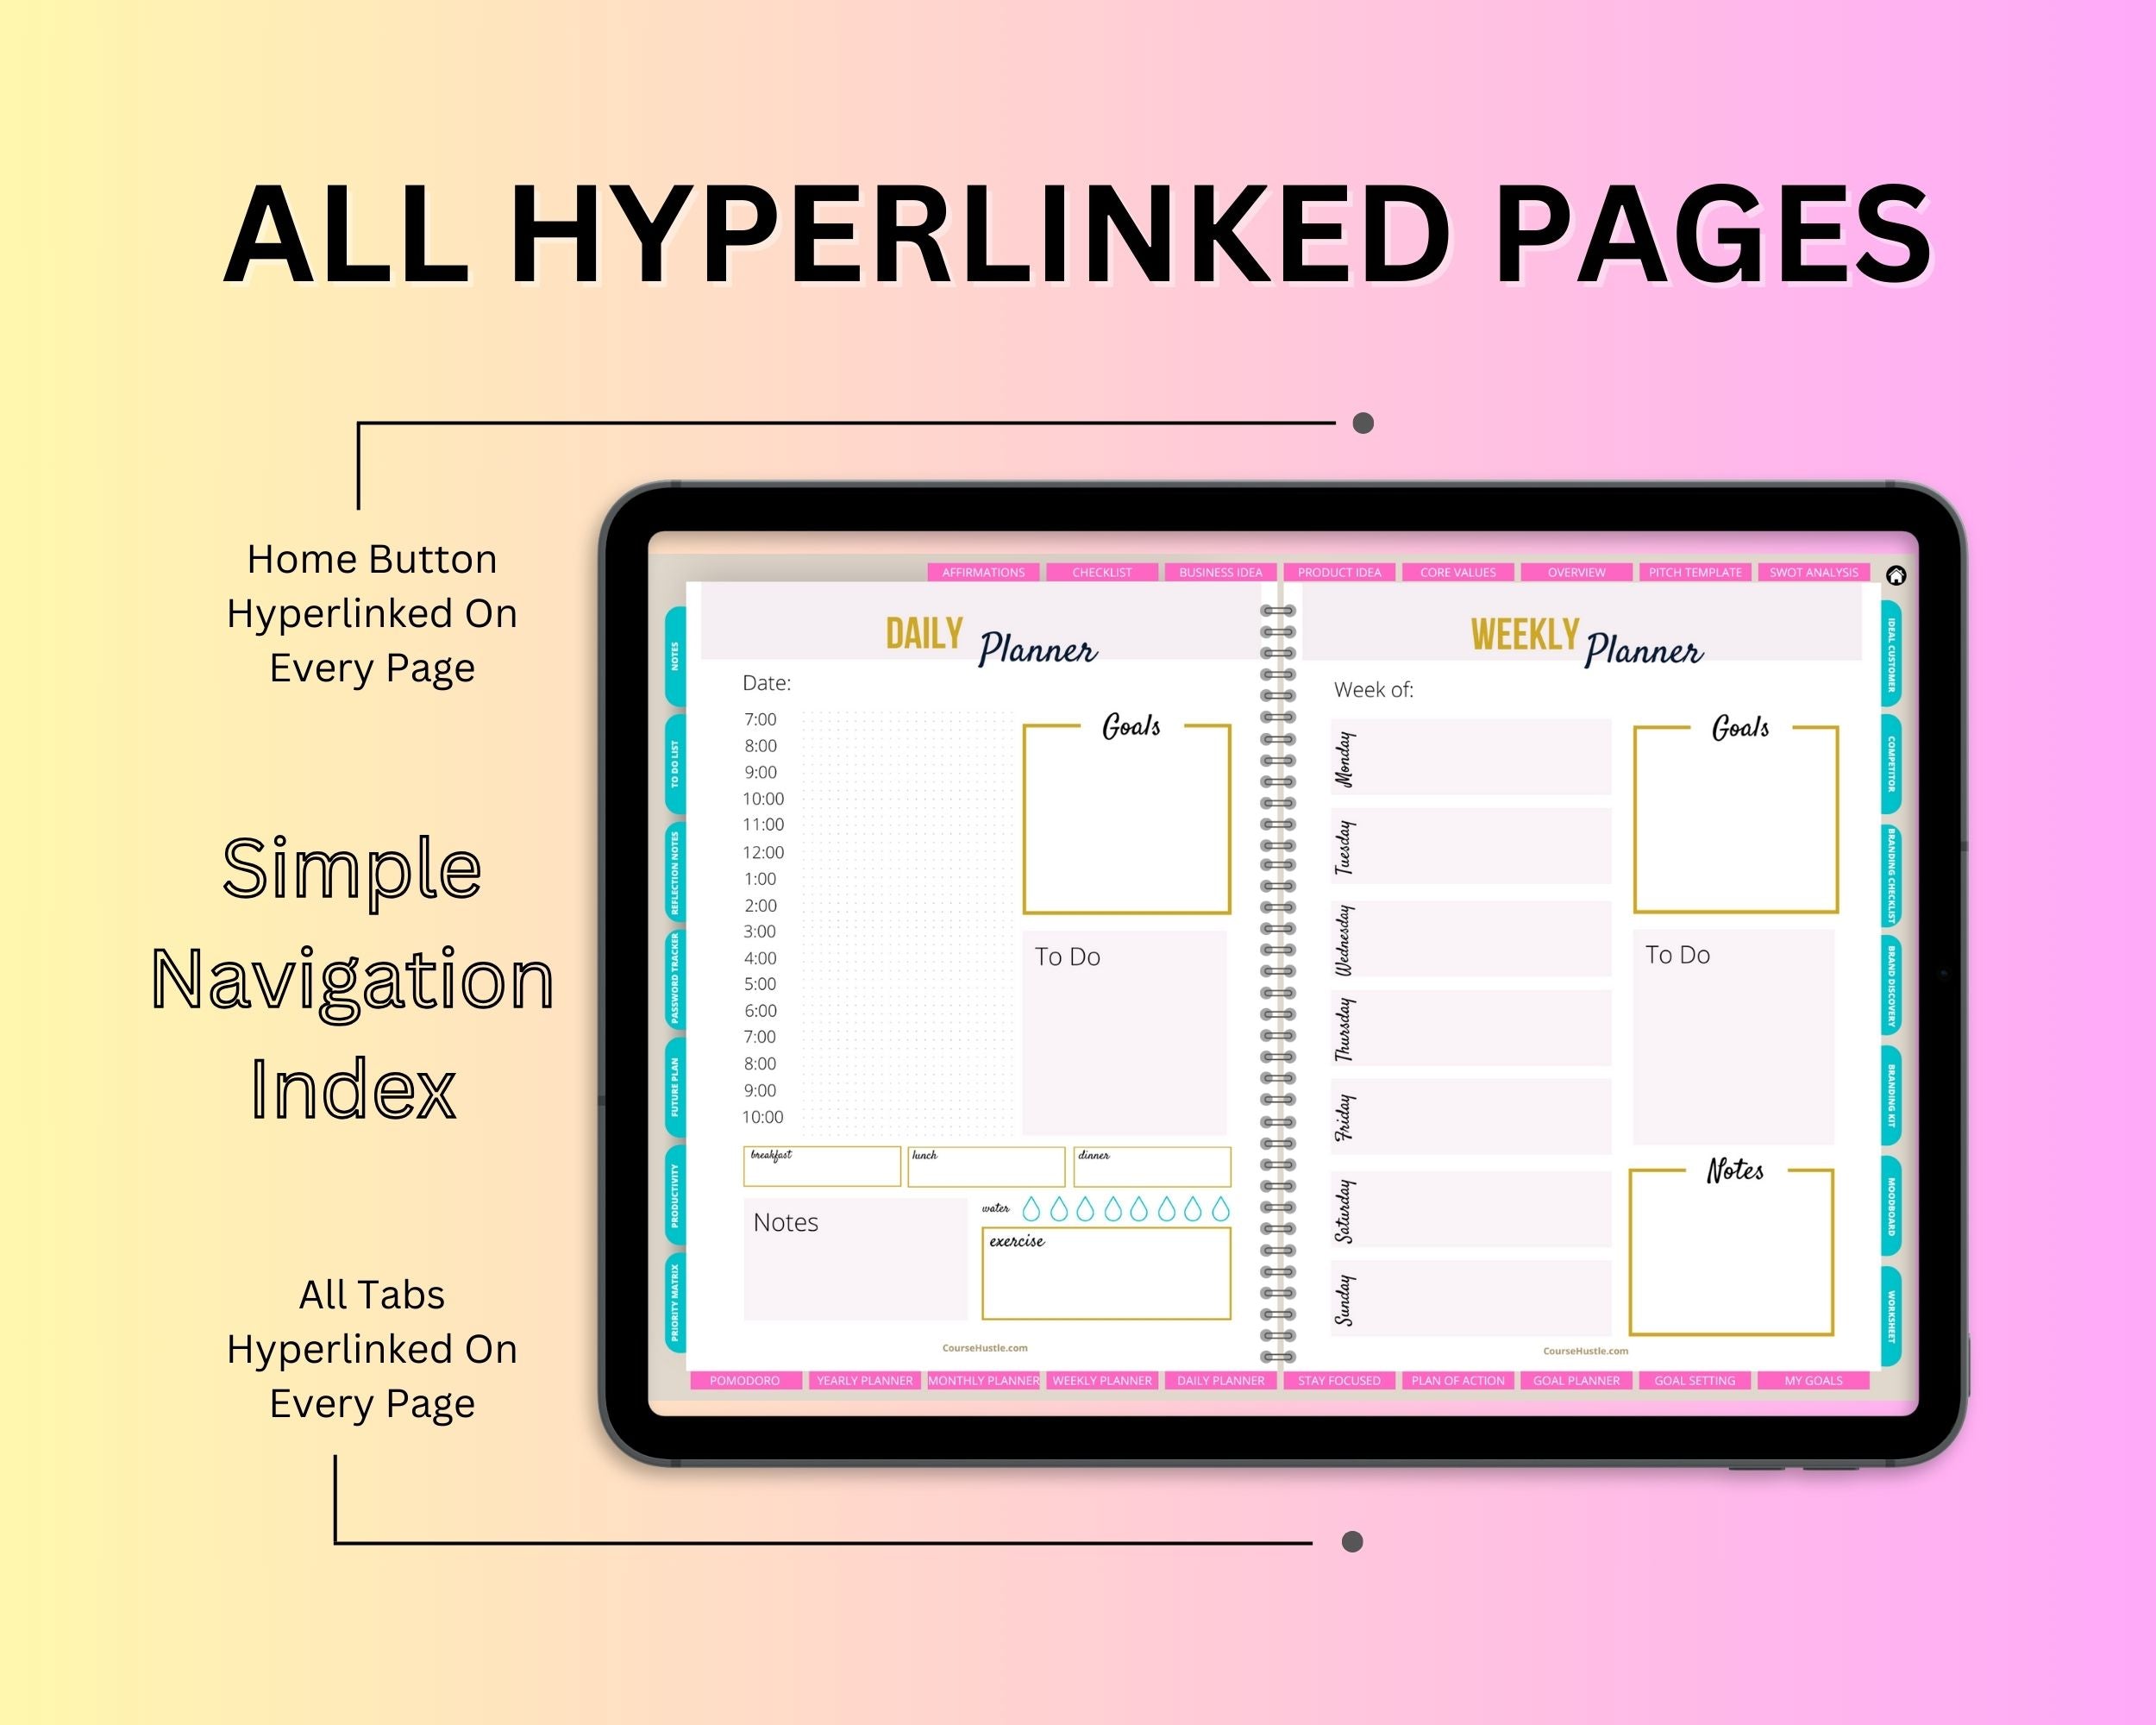 New Entrepreneur Digital Workbook | Hyperlinked PDF | Suitable with Goodness & Notability